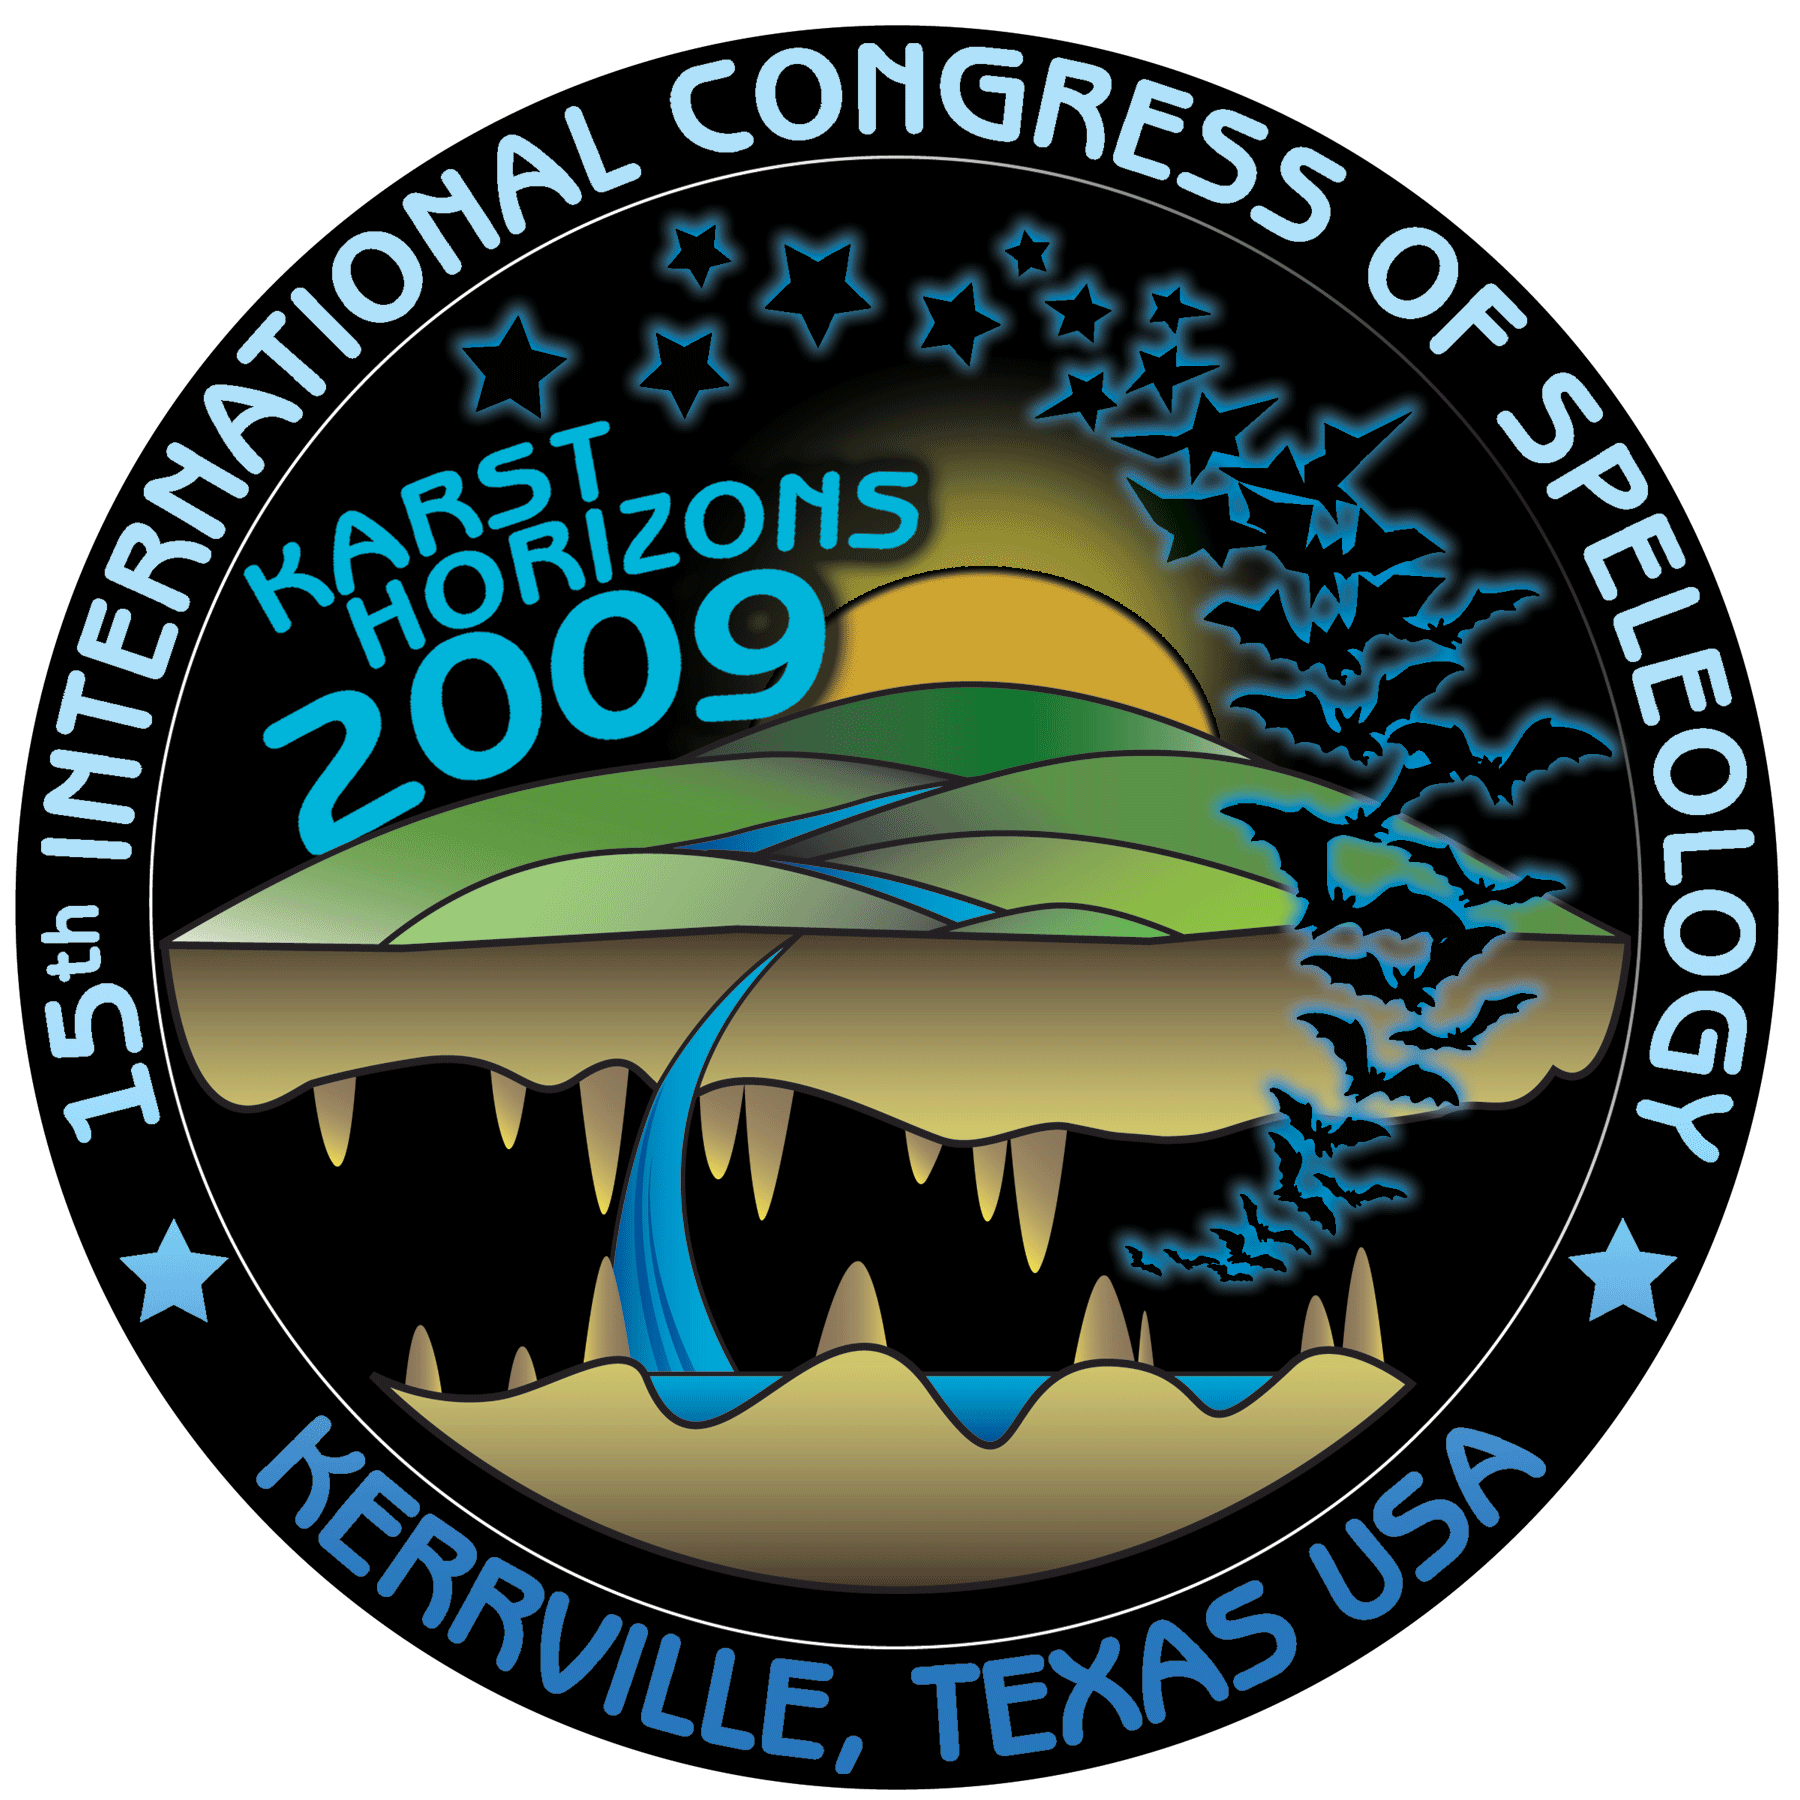 2009 ICS logo and web site